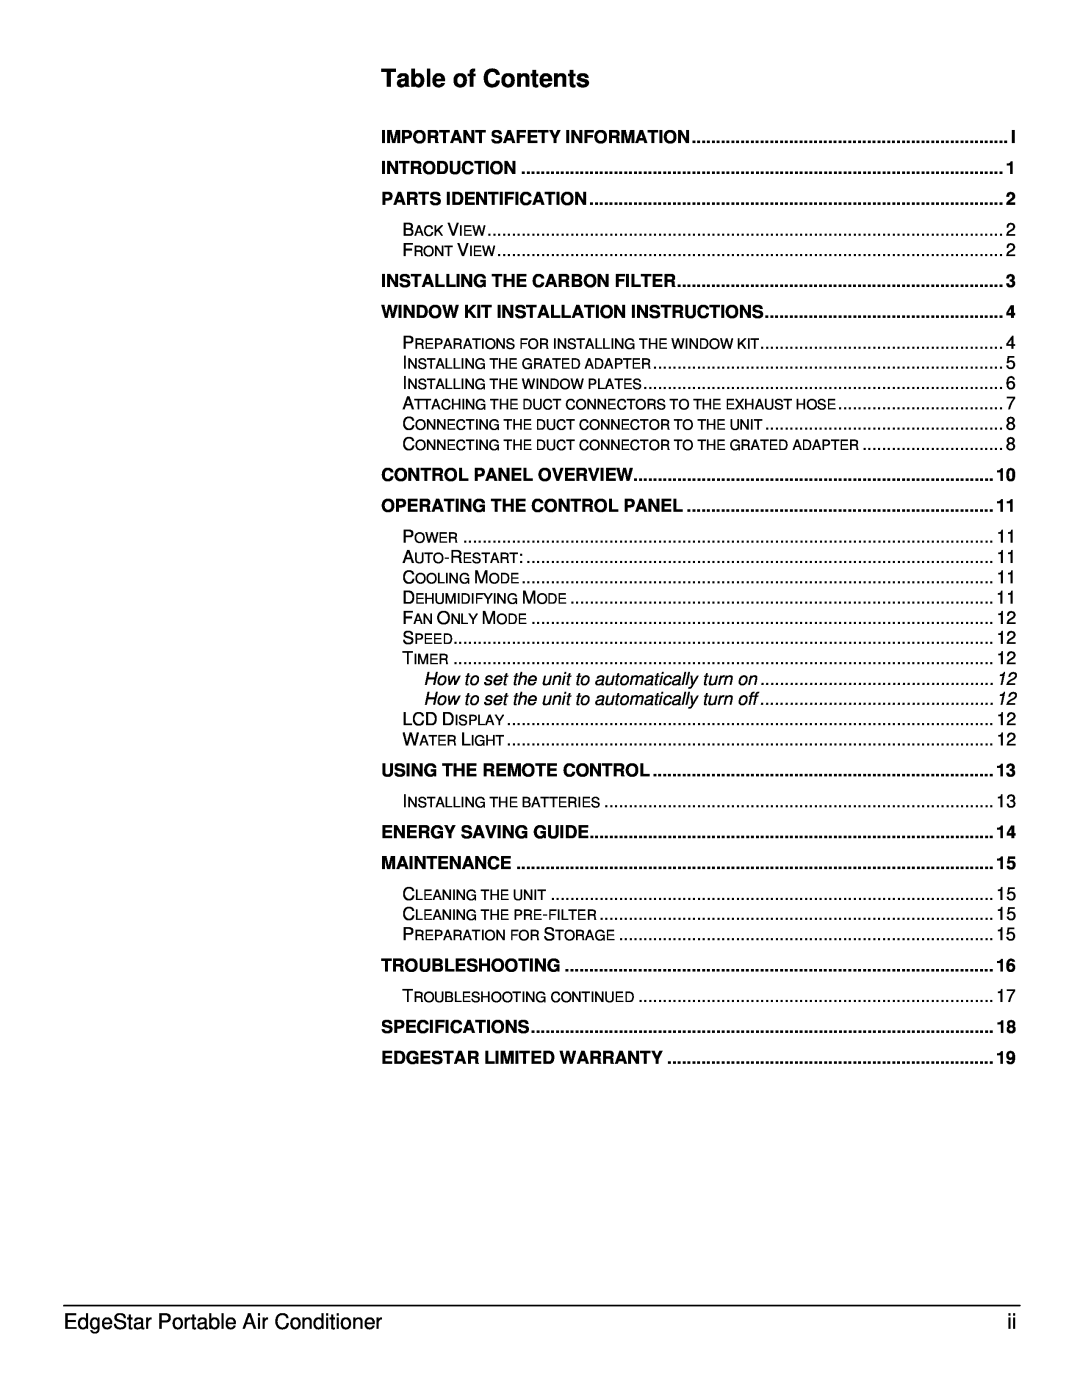 EdgeStar AP12000S-1 owner manual Table of Contents, EdgeStar Portable Air Conditioner 